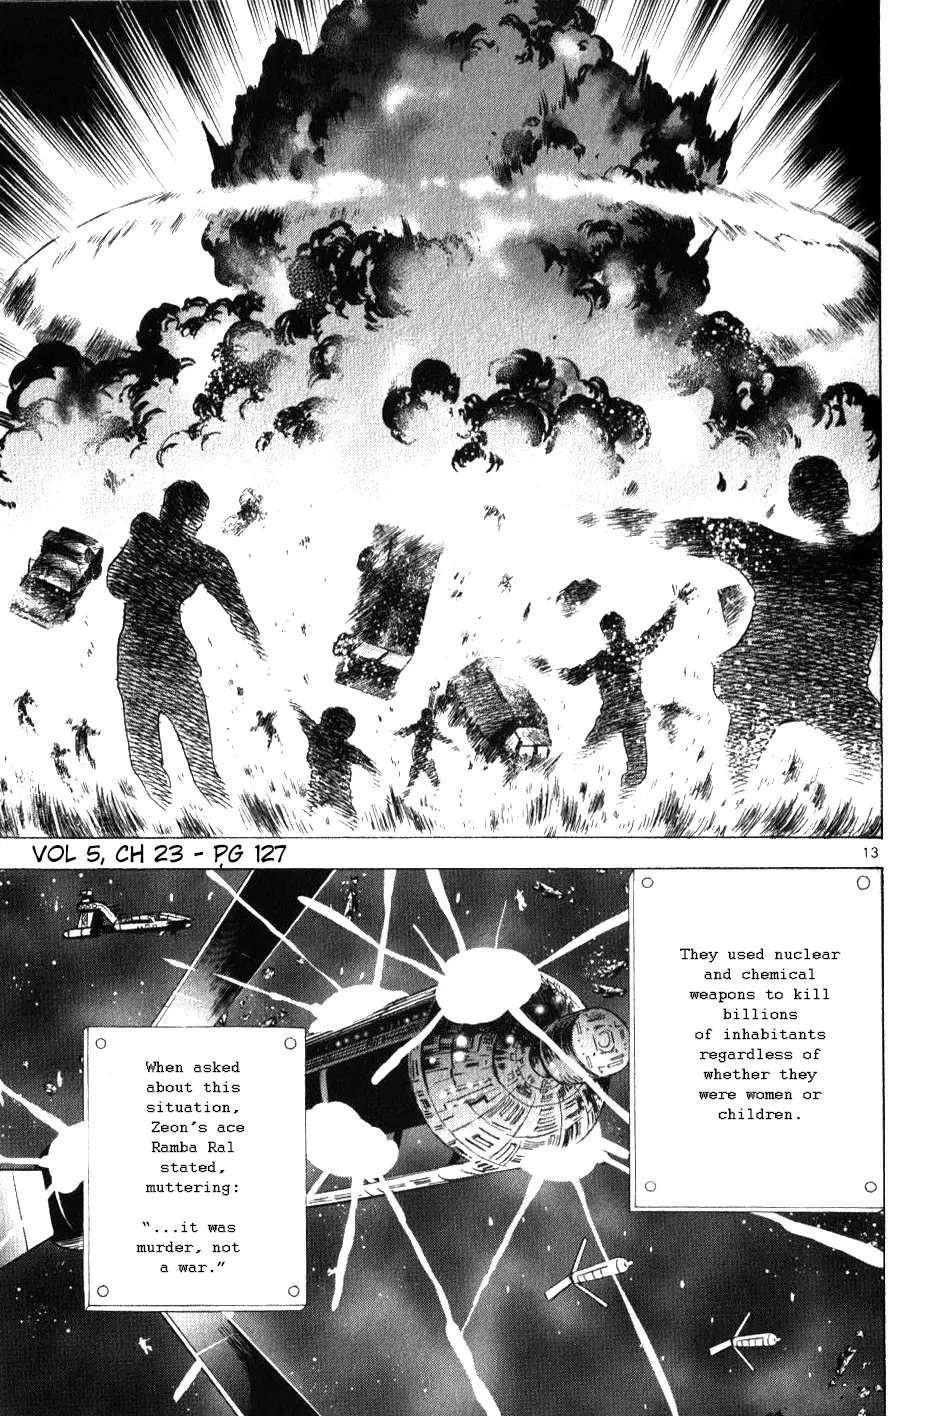 Mobile Suit Gundam Aggressor - 23 page 13-61094506